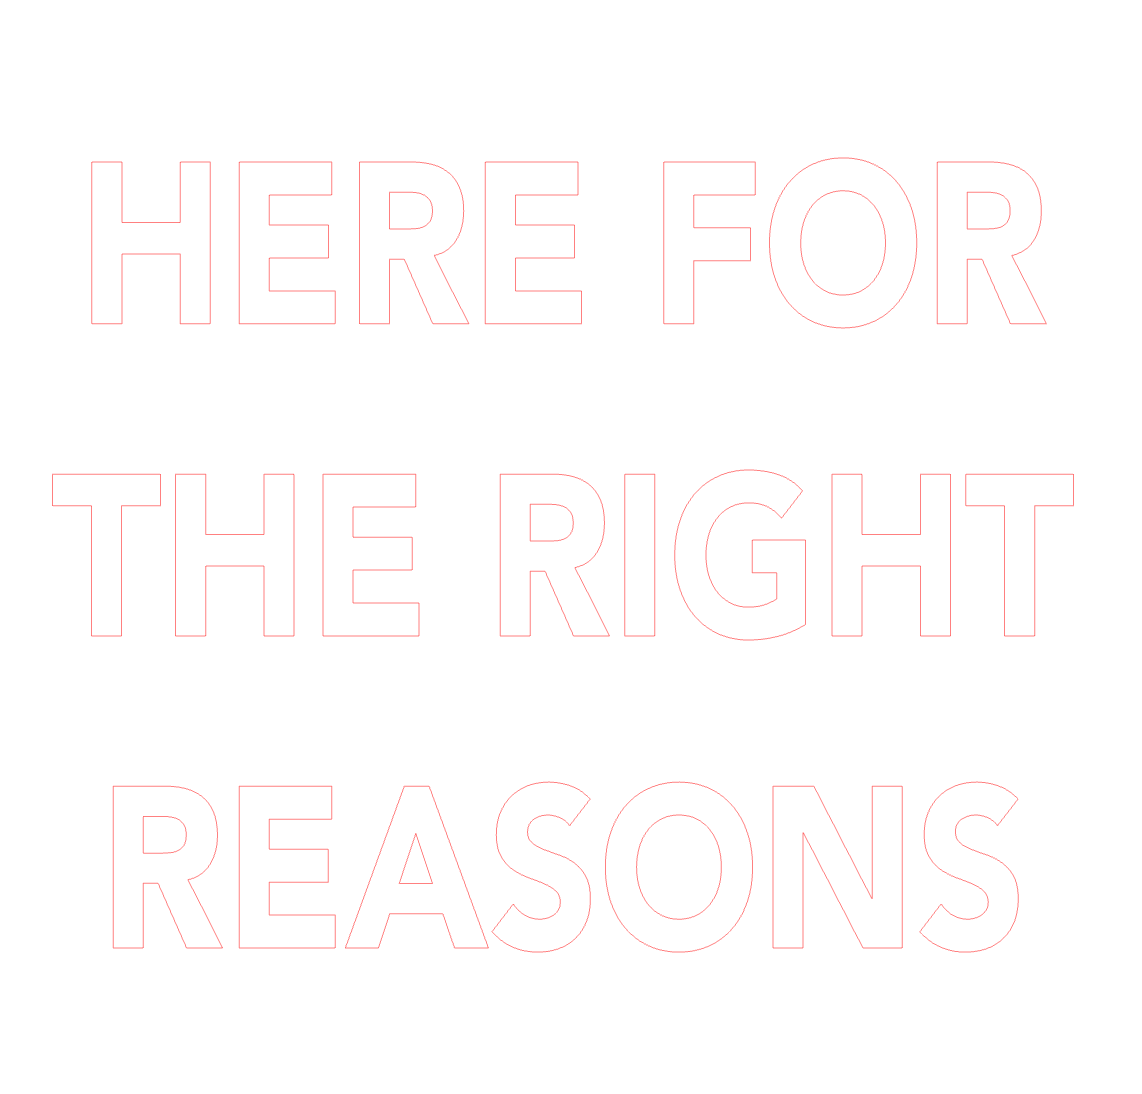 right reasons